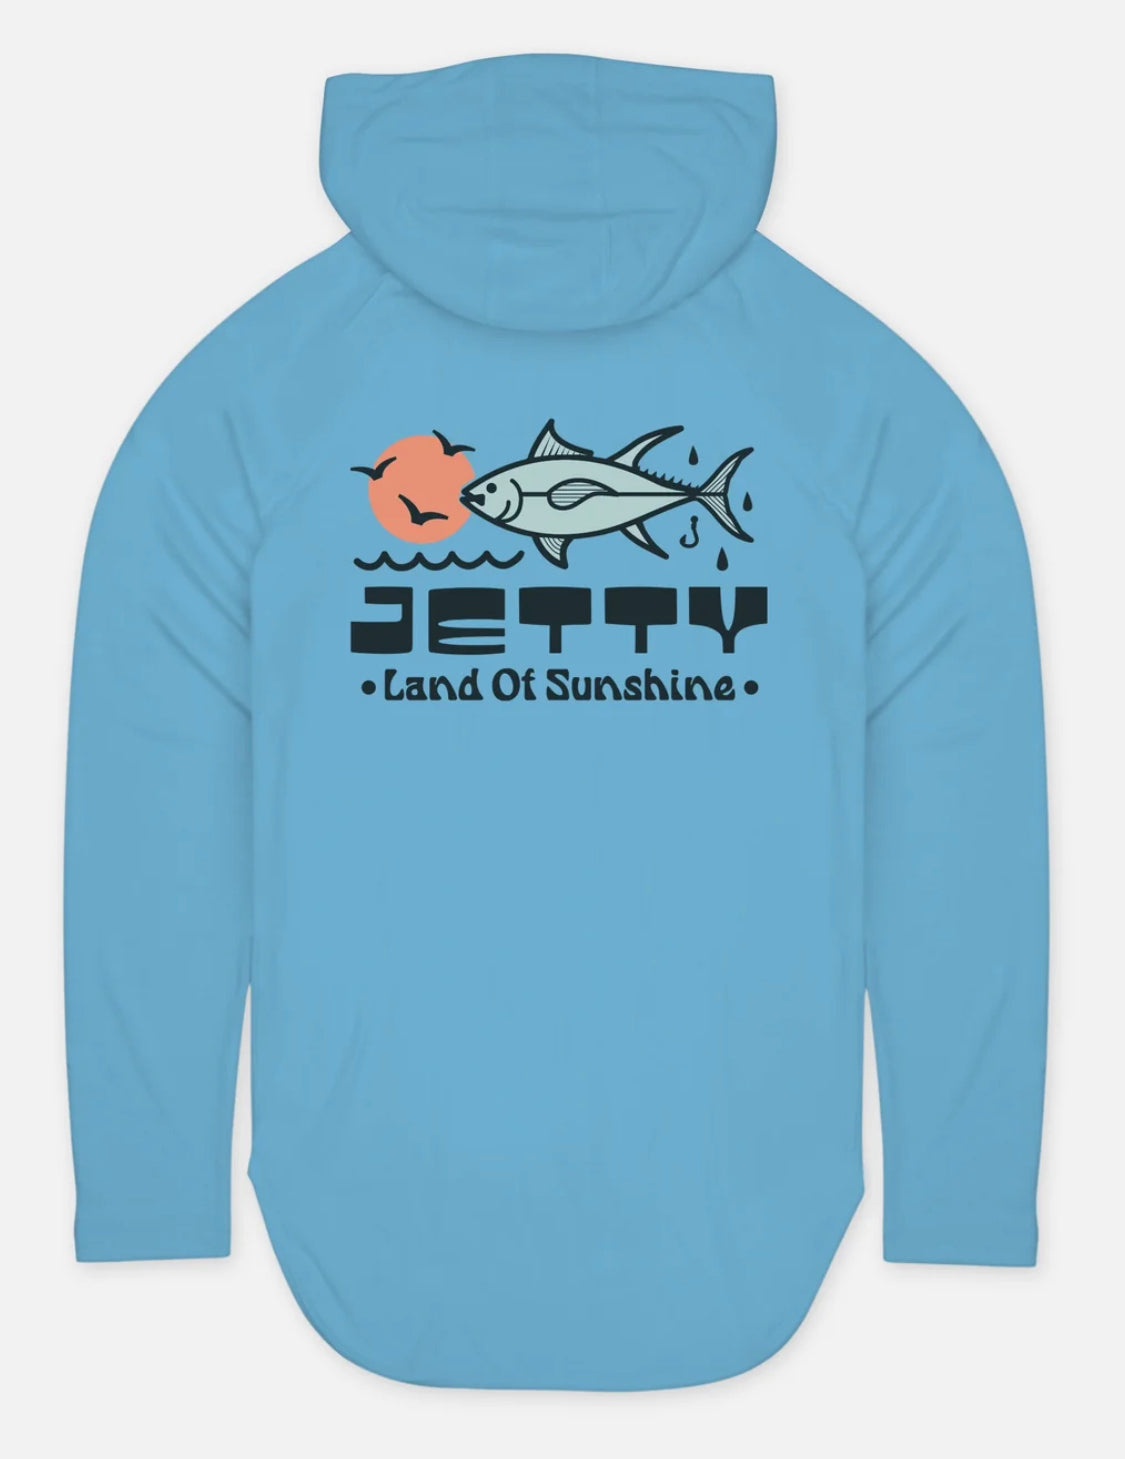 Jetty - Bluefin UV Longsleeve Shirt